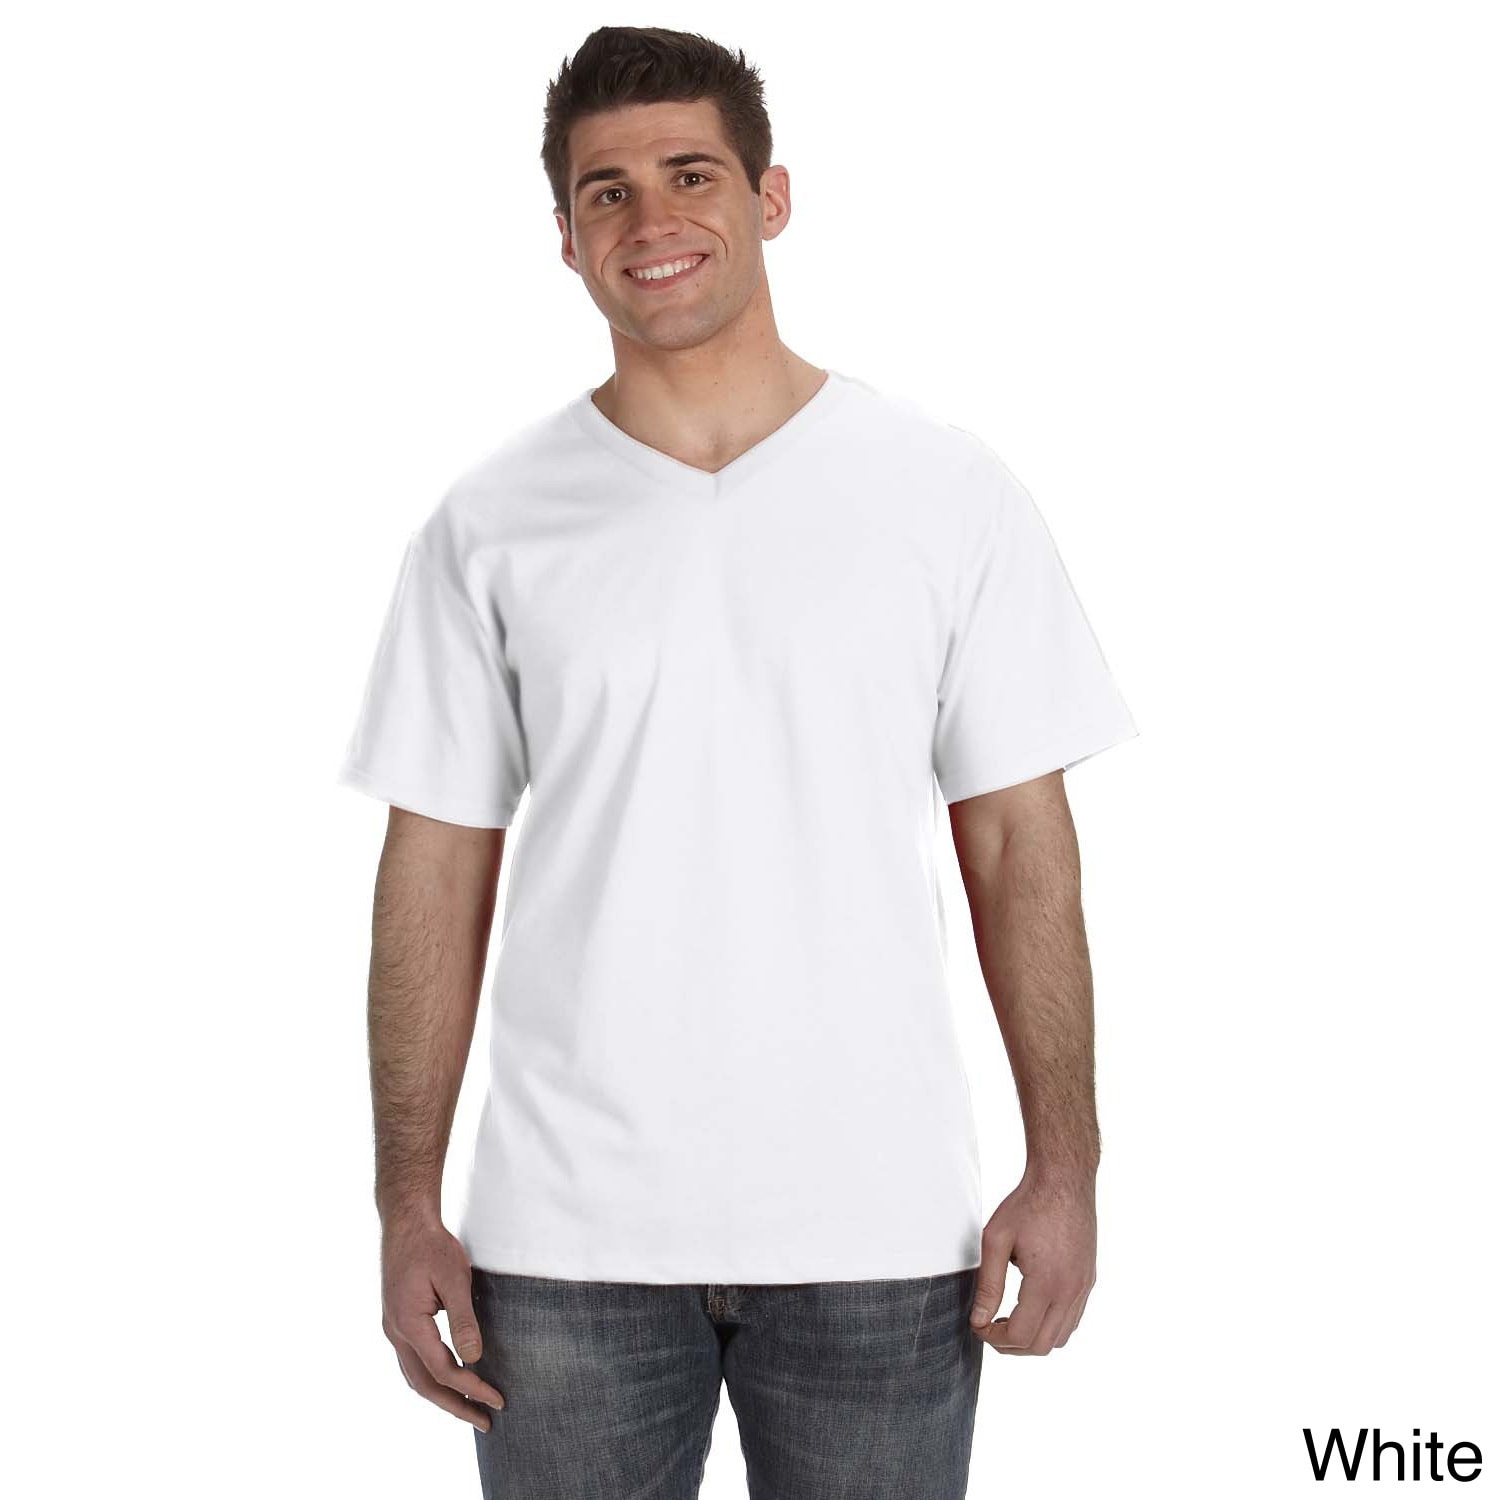 white t shirt v neck men